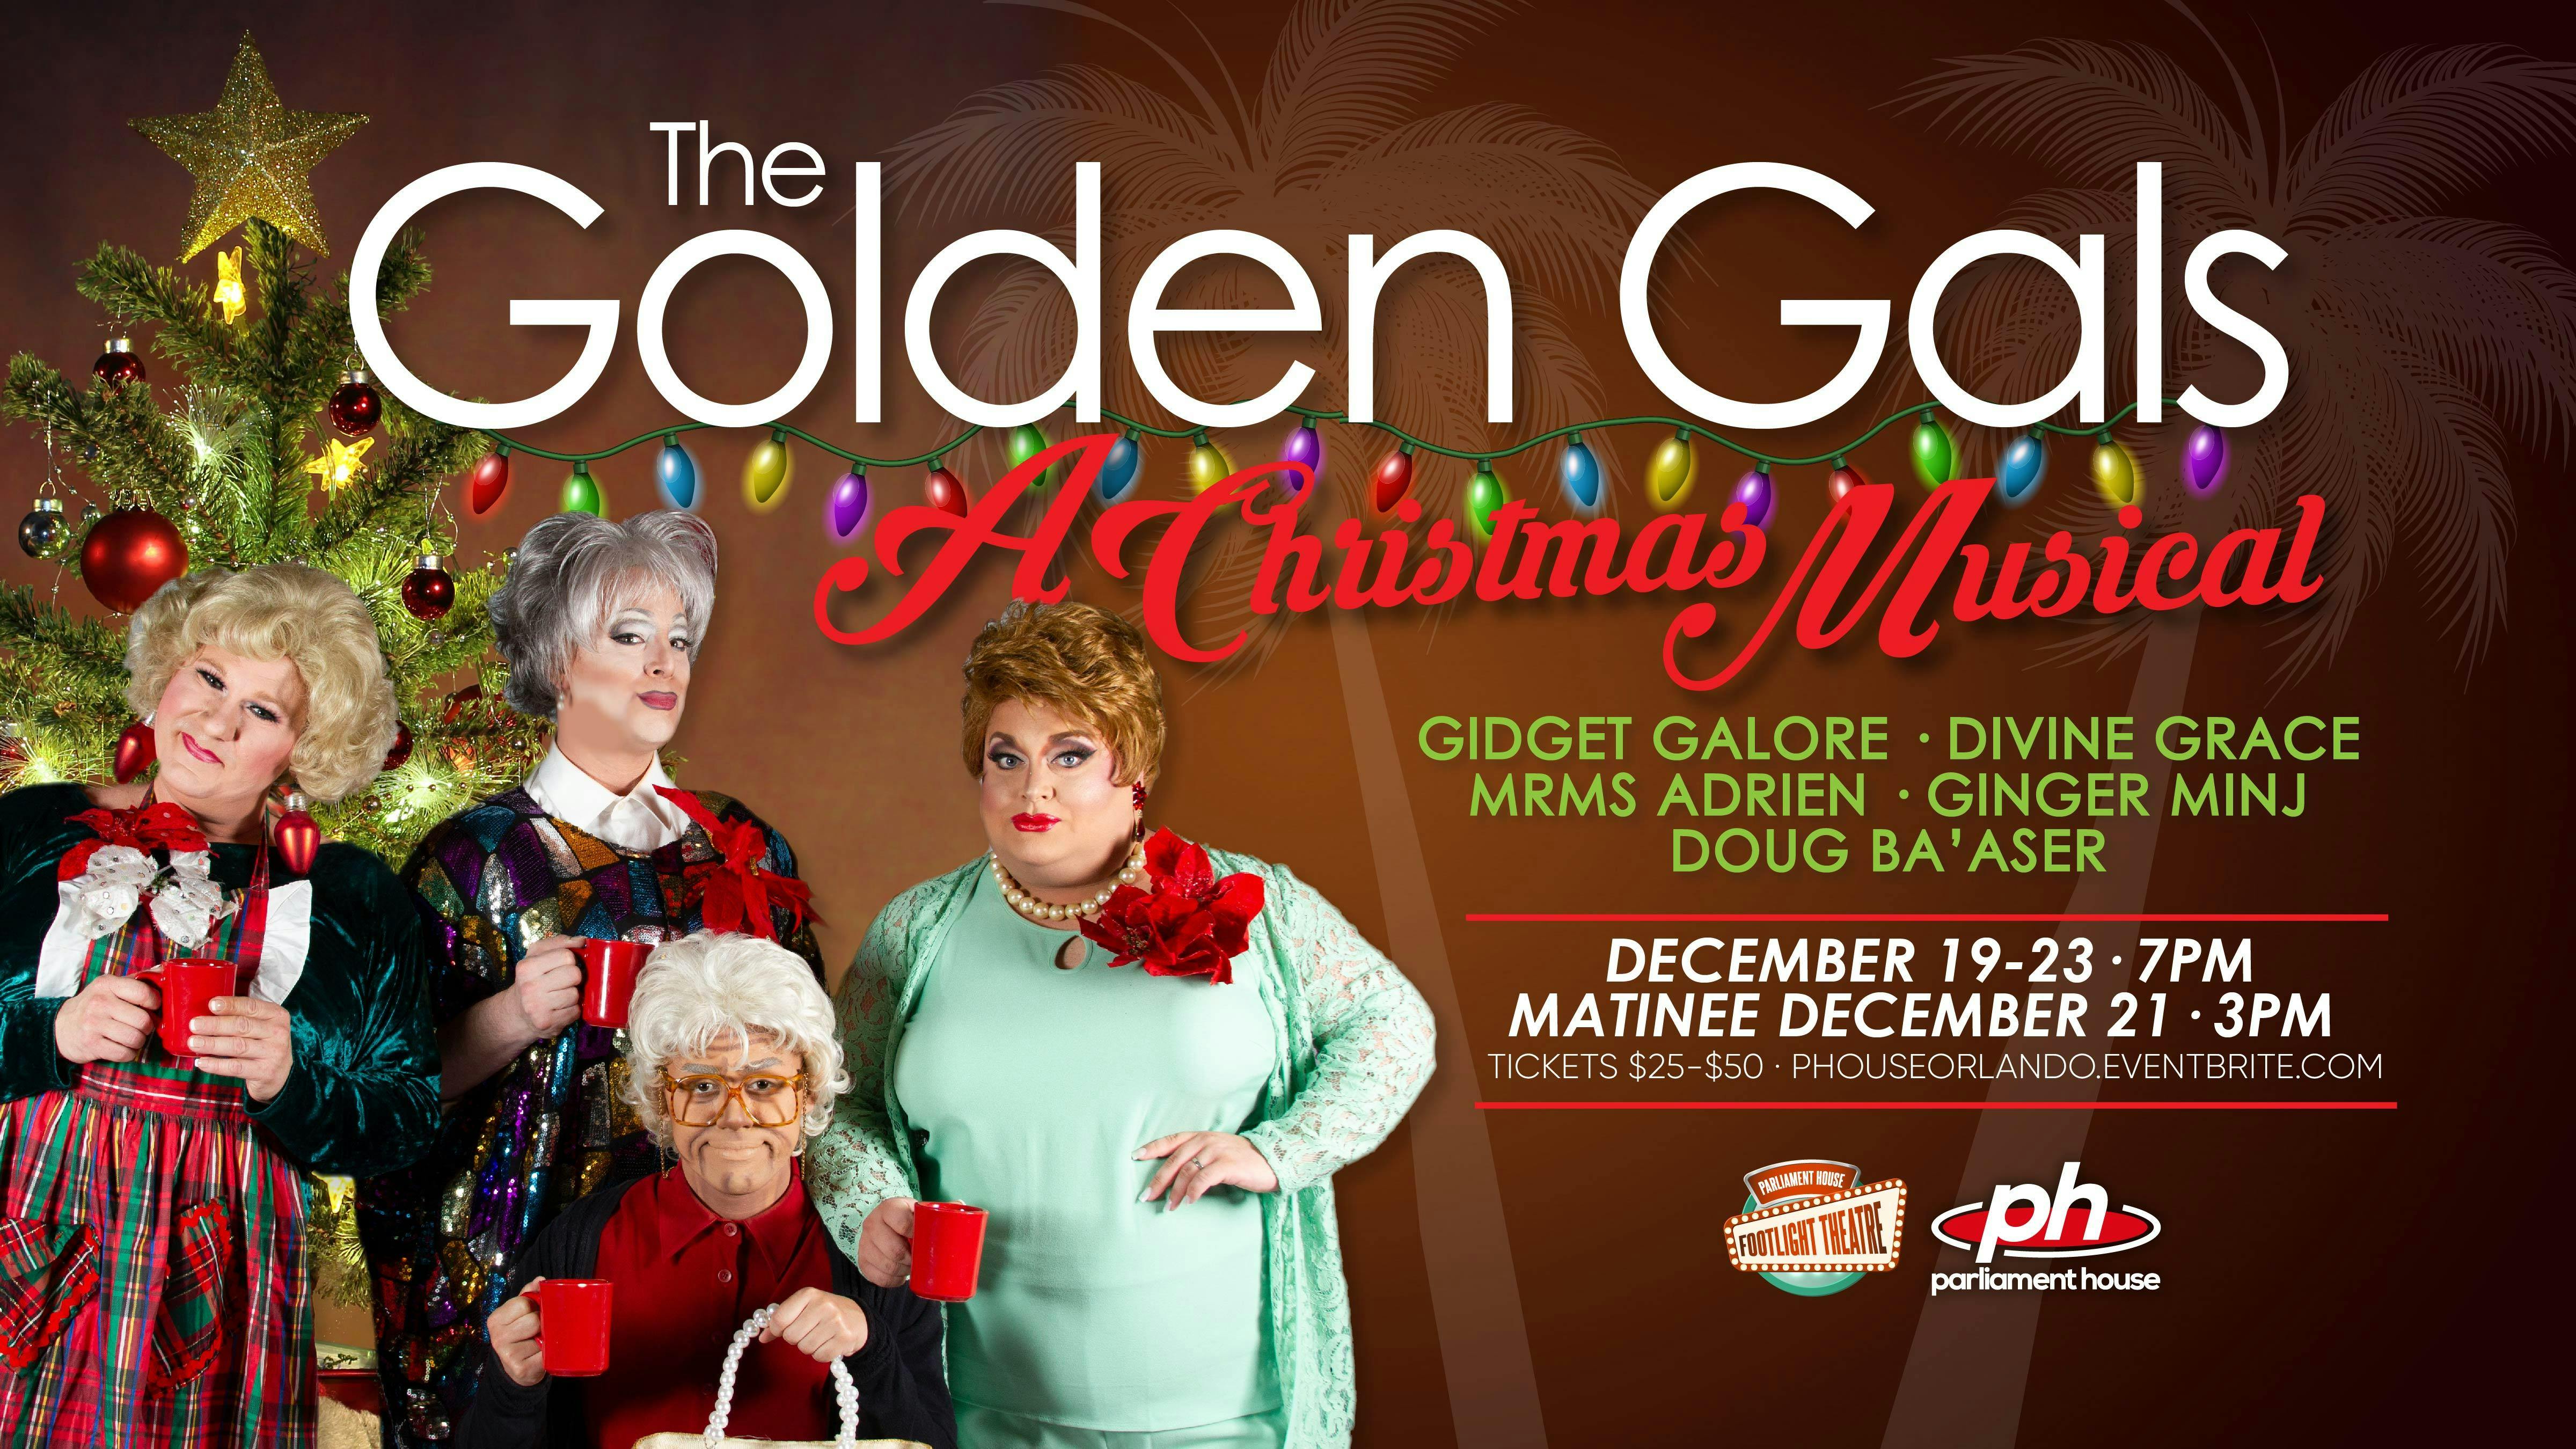 The Golden Gals - A Christmas Musical!